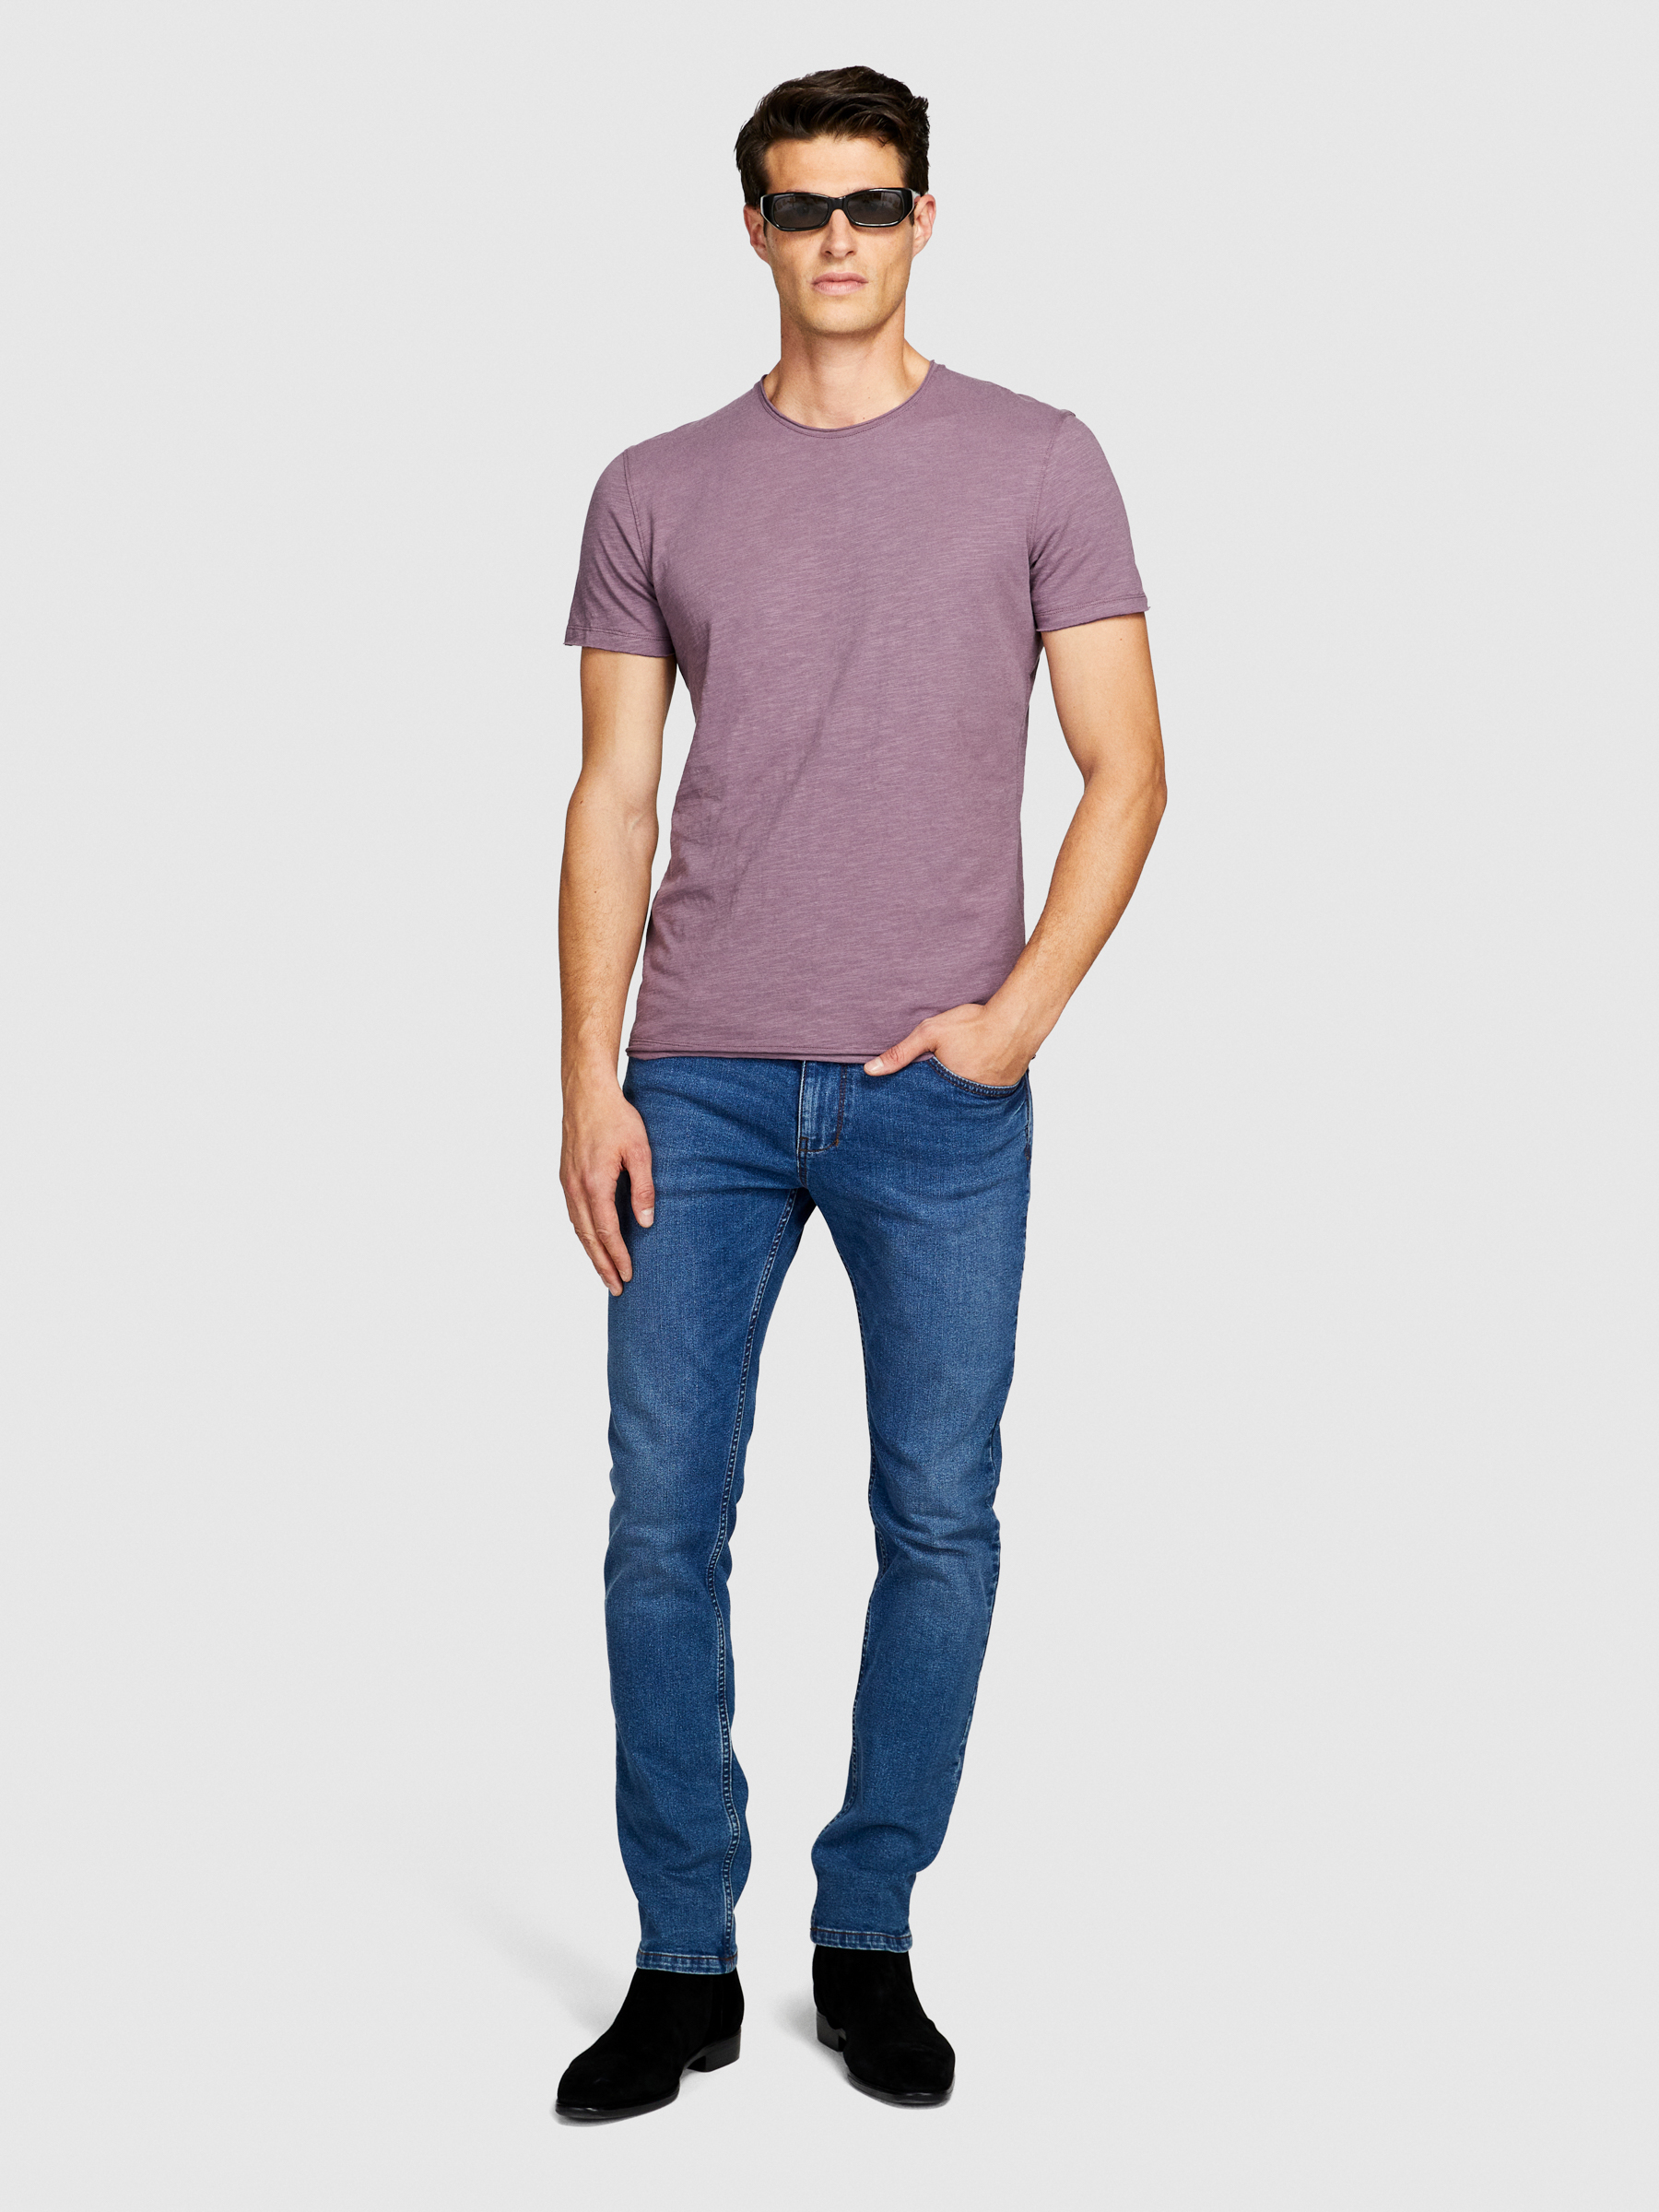 Sisley - Slim Fit T-shirt, Man, Mauve, Size: EL